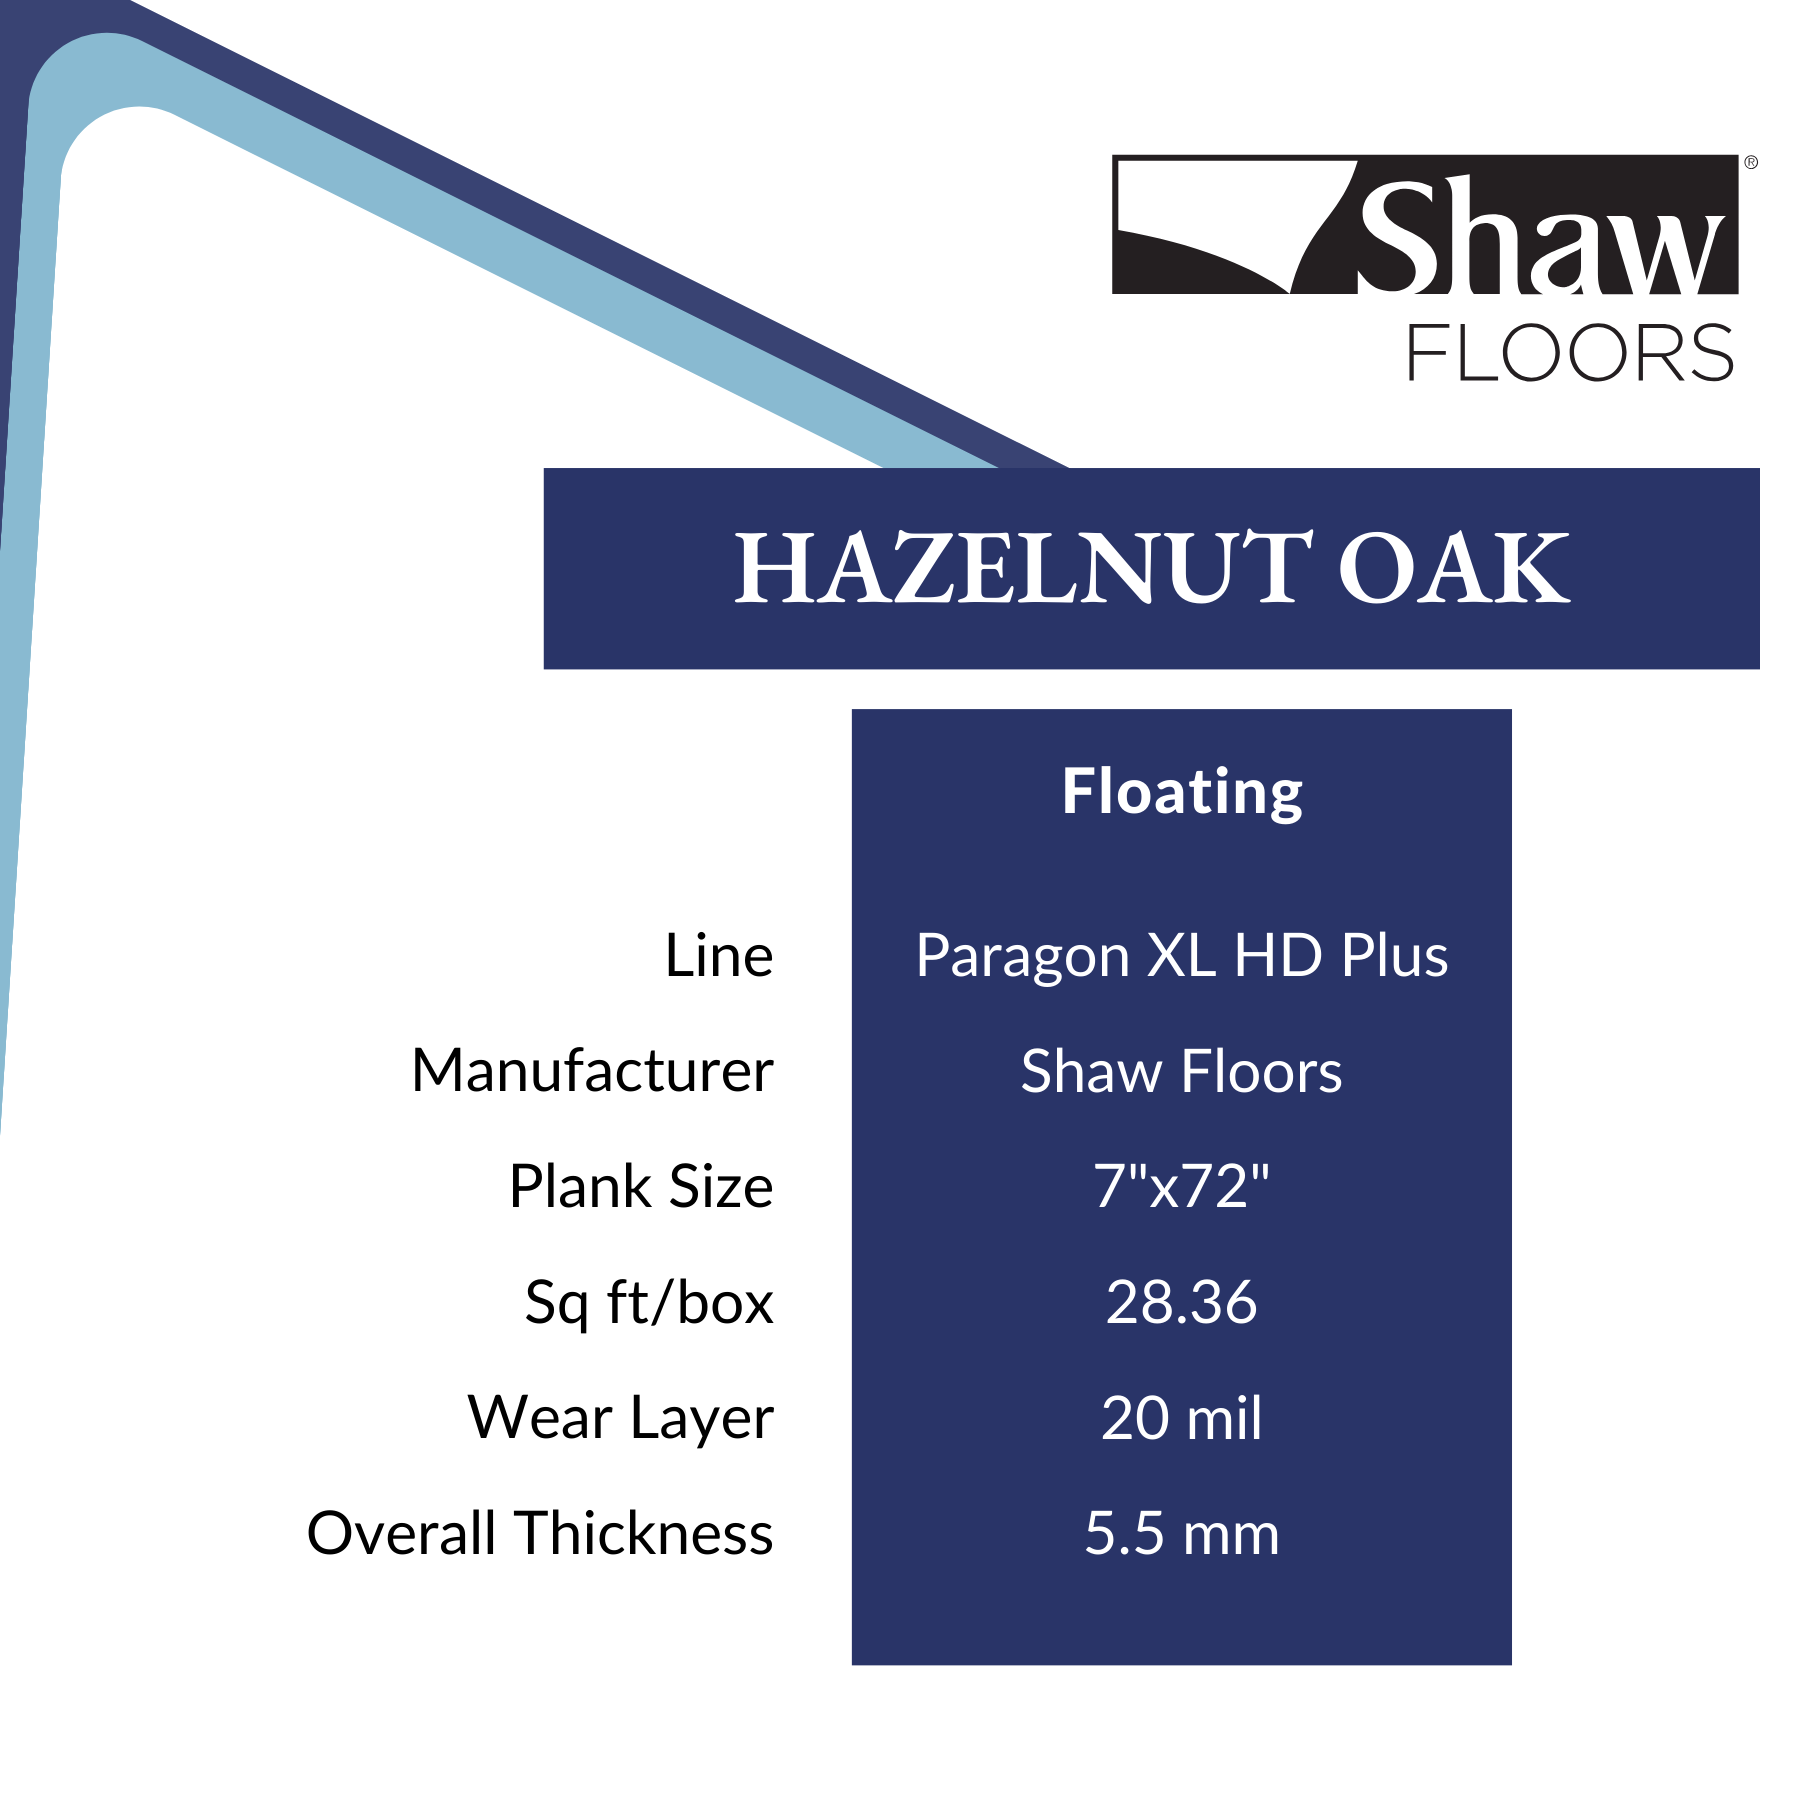 Hazelnut Oak Flooring by Shaw, Clearance at Calhoun's in Springfield, IL Specs